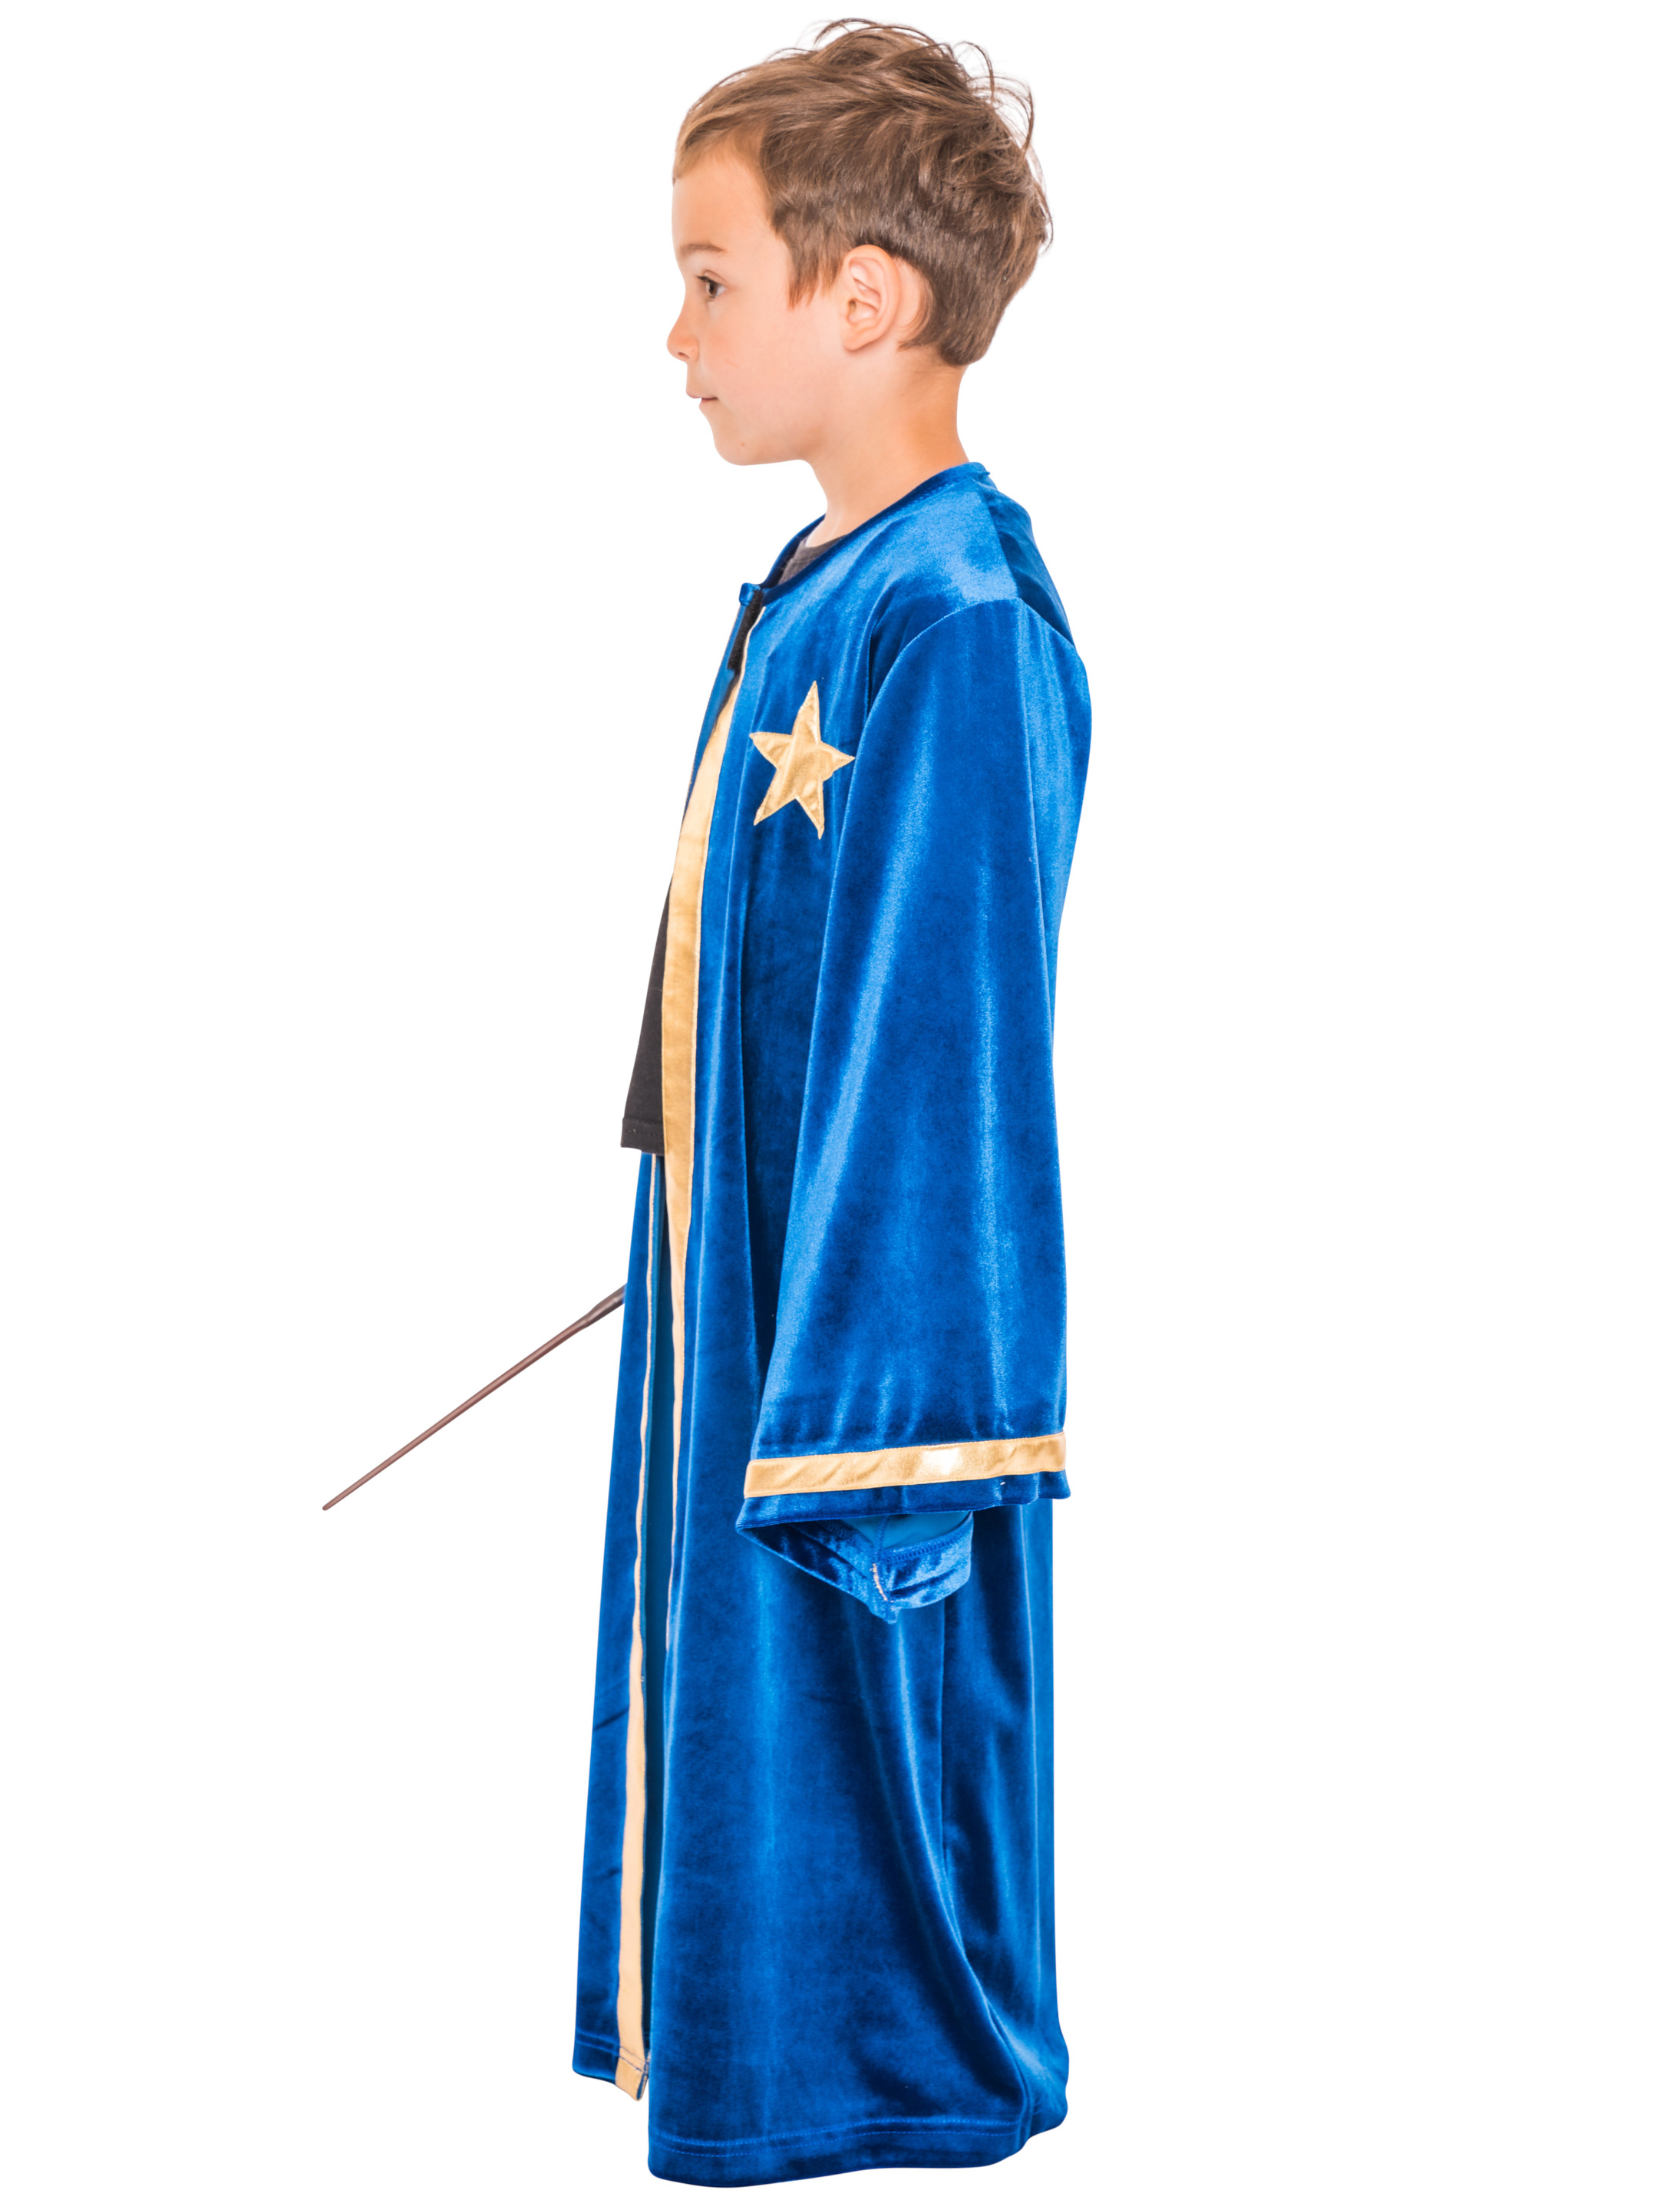 Mantel Zauberer Kinder blau 116